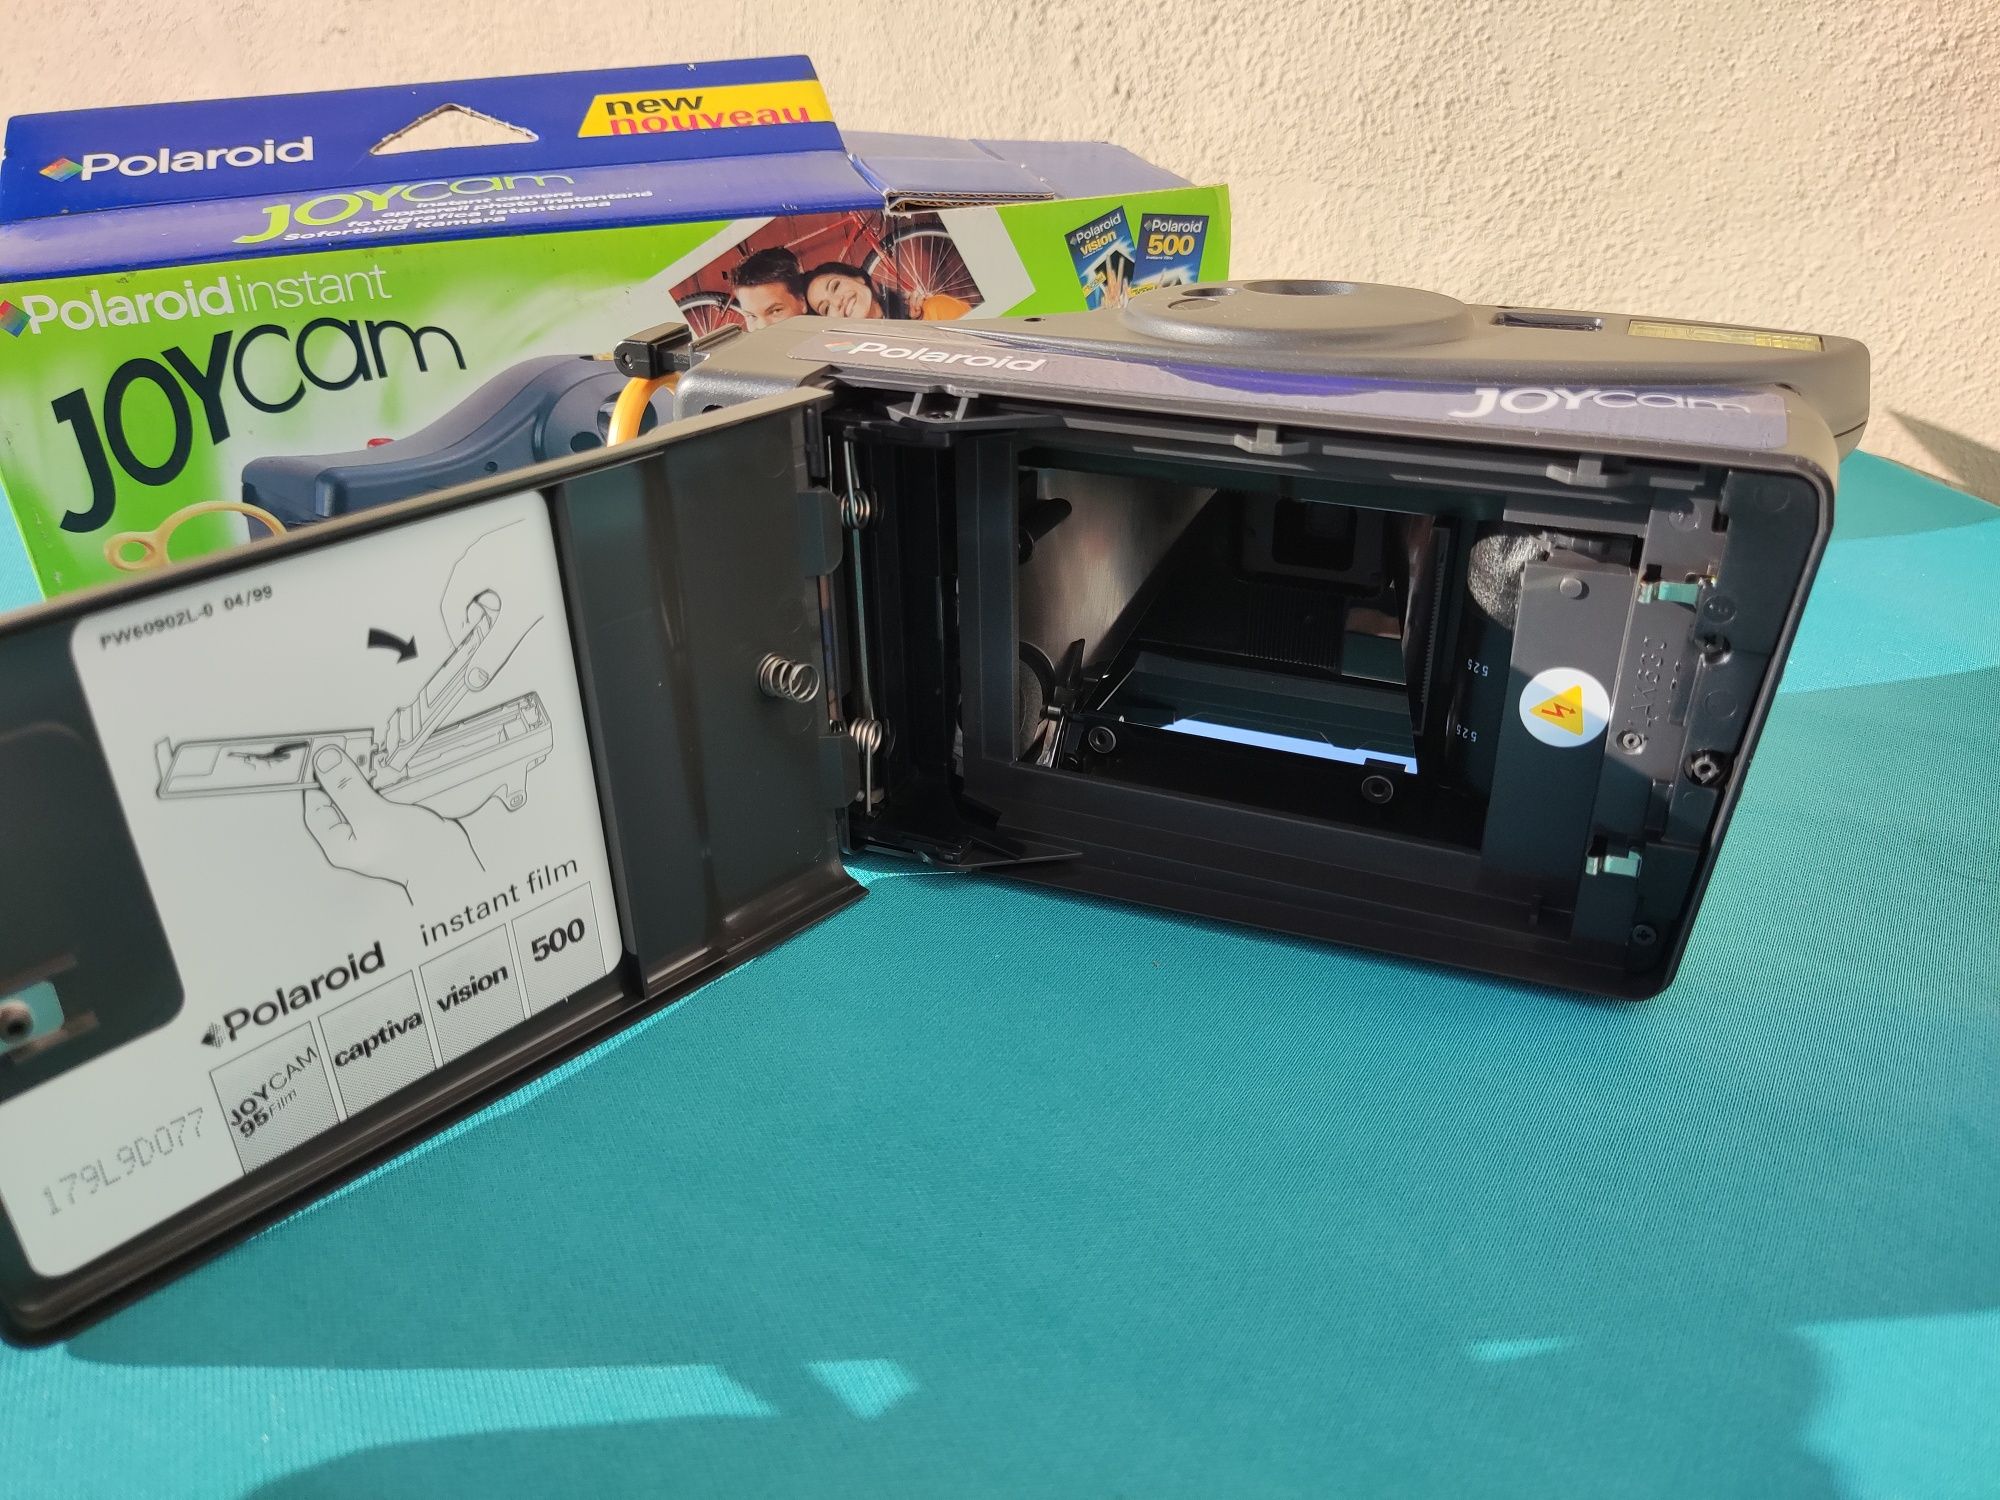 Polaroid Joycam 500 (black version) - vintage (Caixa Original)